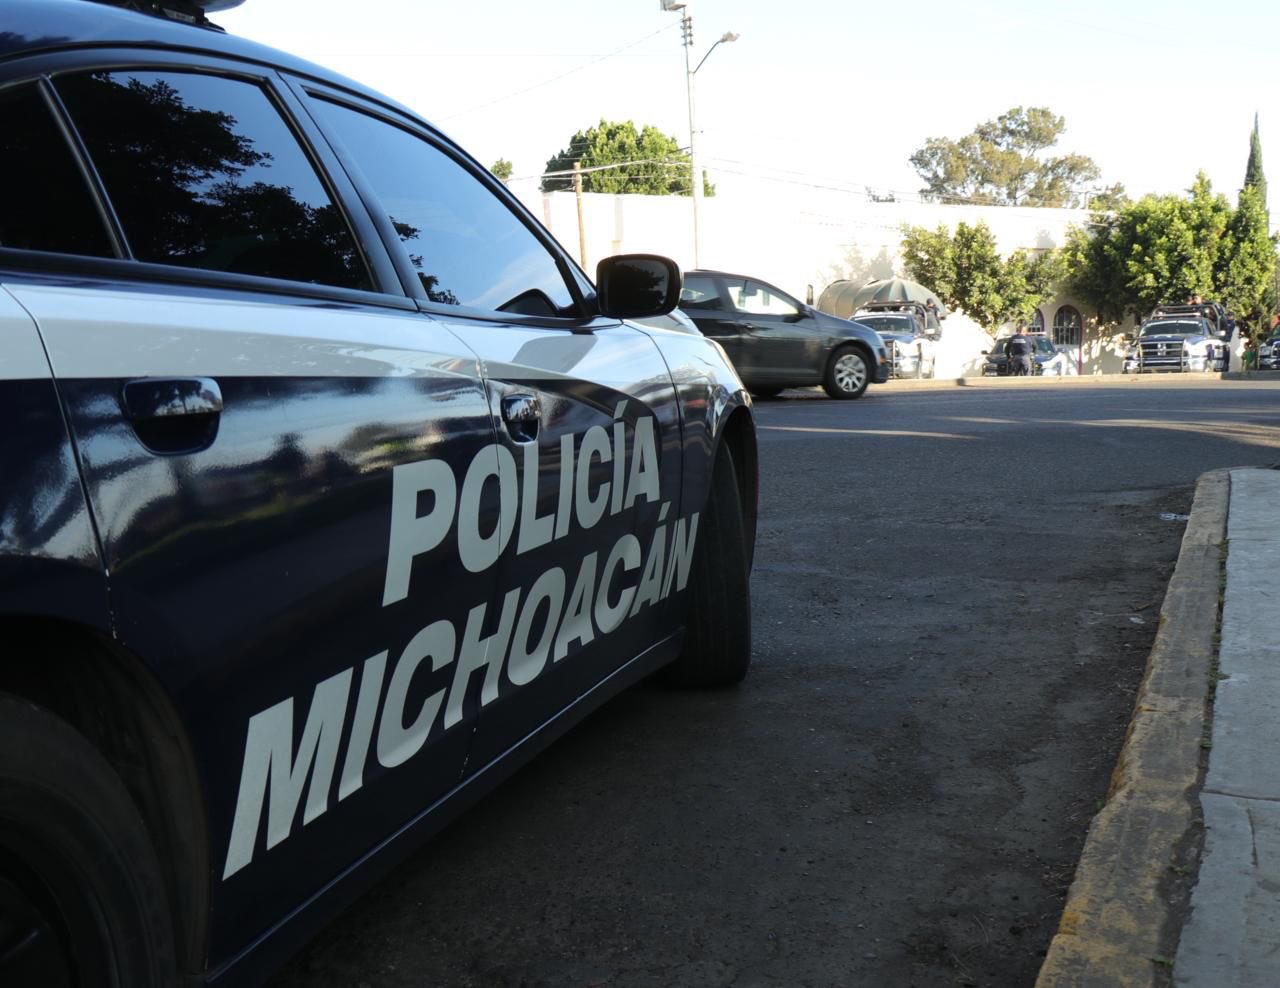 Policía michoacán (Foto: Twitter@MICHOACANSSP)